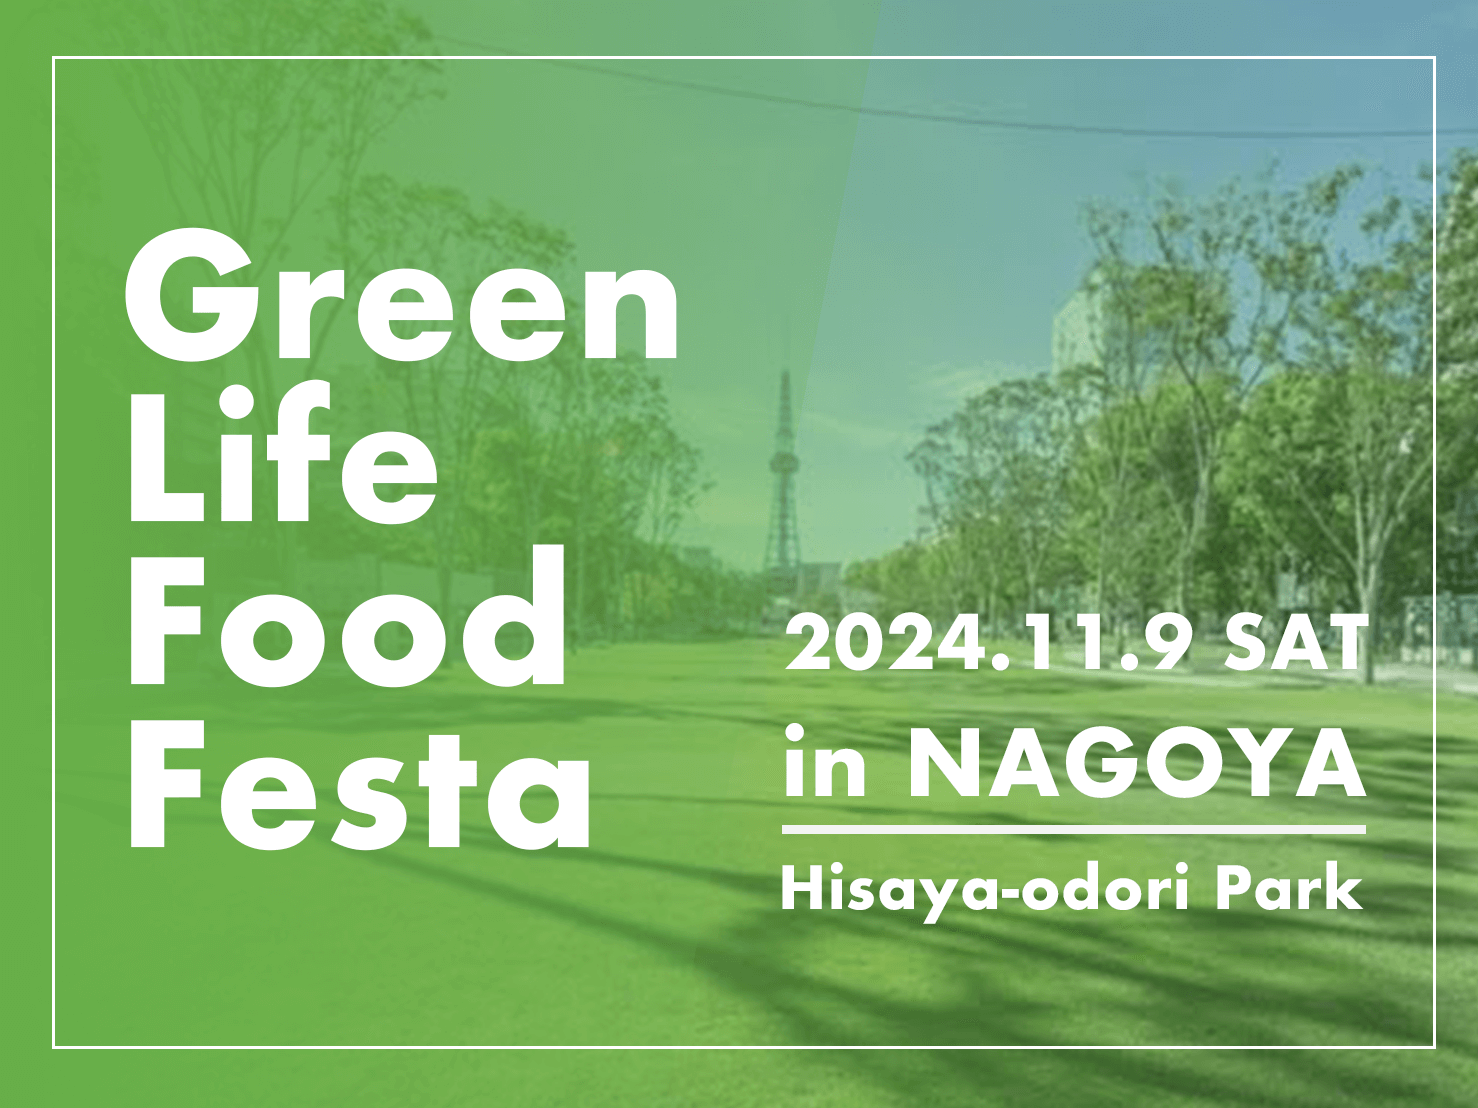 Green Life Food Festa in NAGOYA